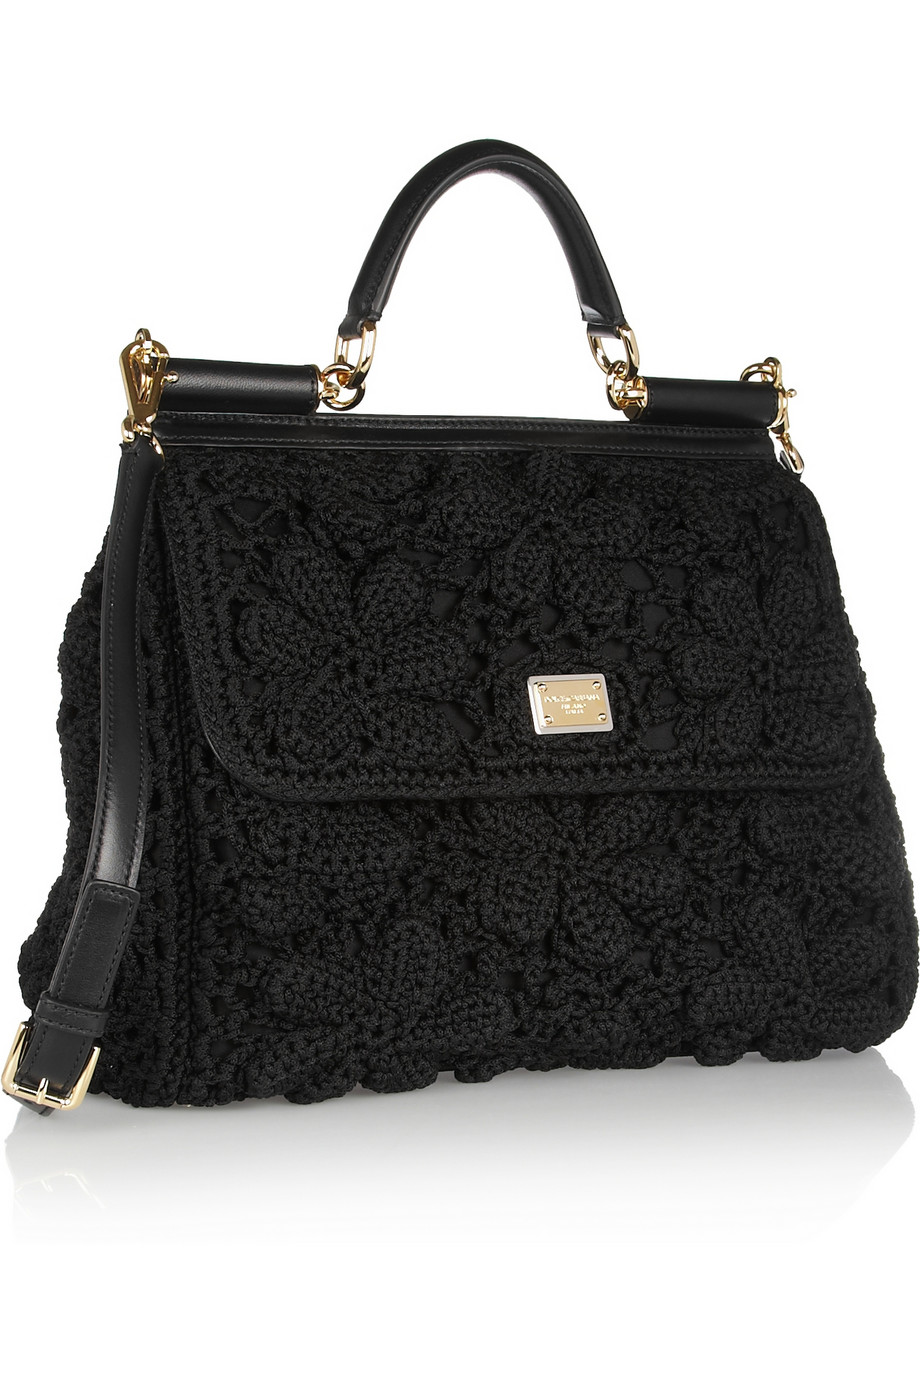 Dolce & gabbana Miss Sicily Crochet and Leather Shoulder Bag in Black ...